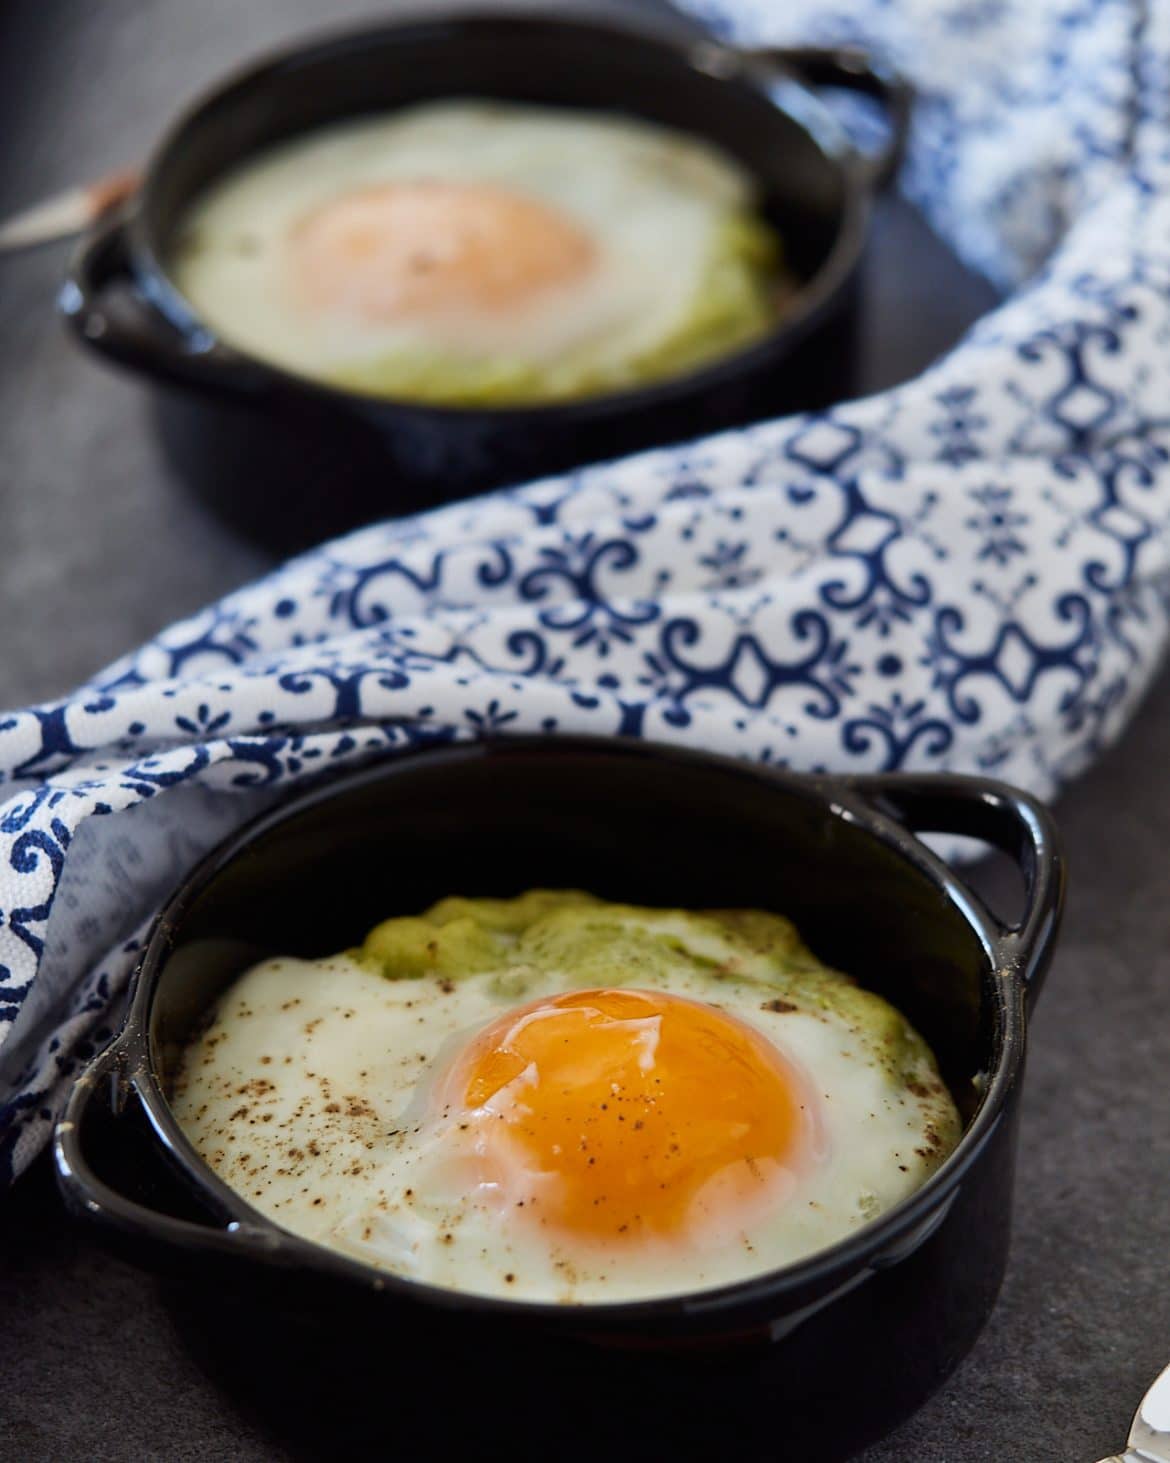 Oven Baked eggs with avocado Hollandaise sauce